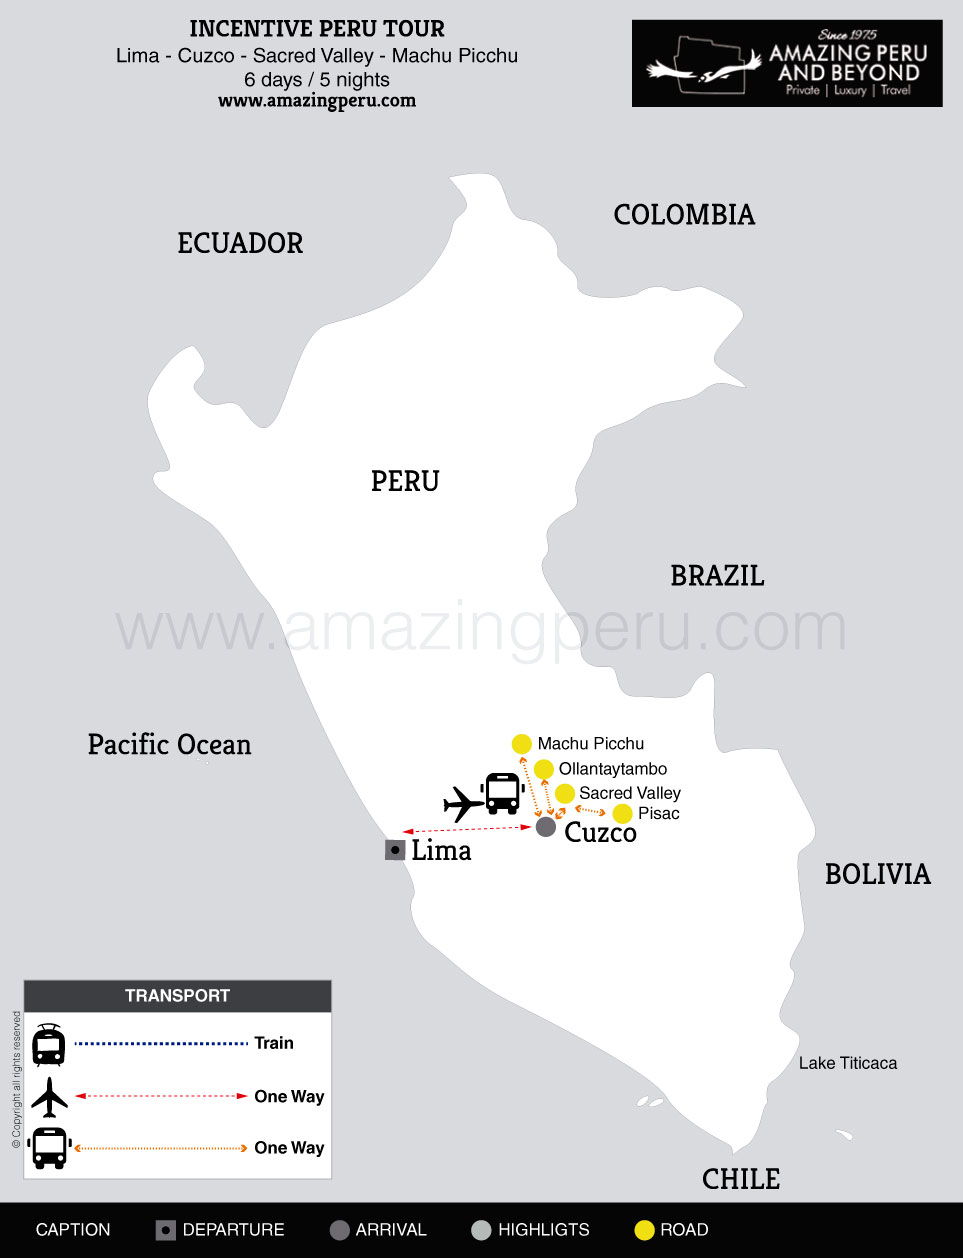 2022 Incentive Peru Tour - 6 days - 6 days / 5 nights.